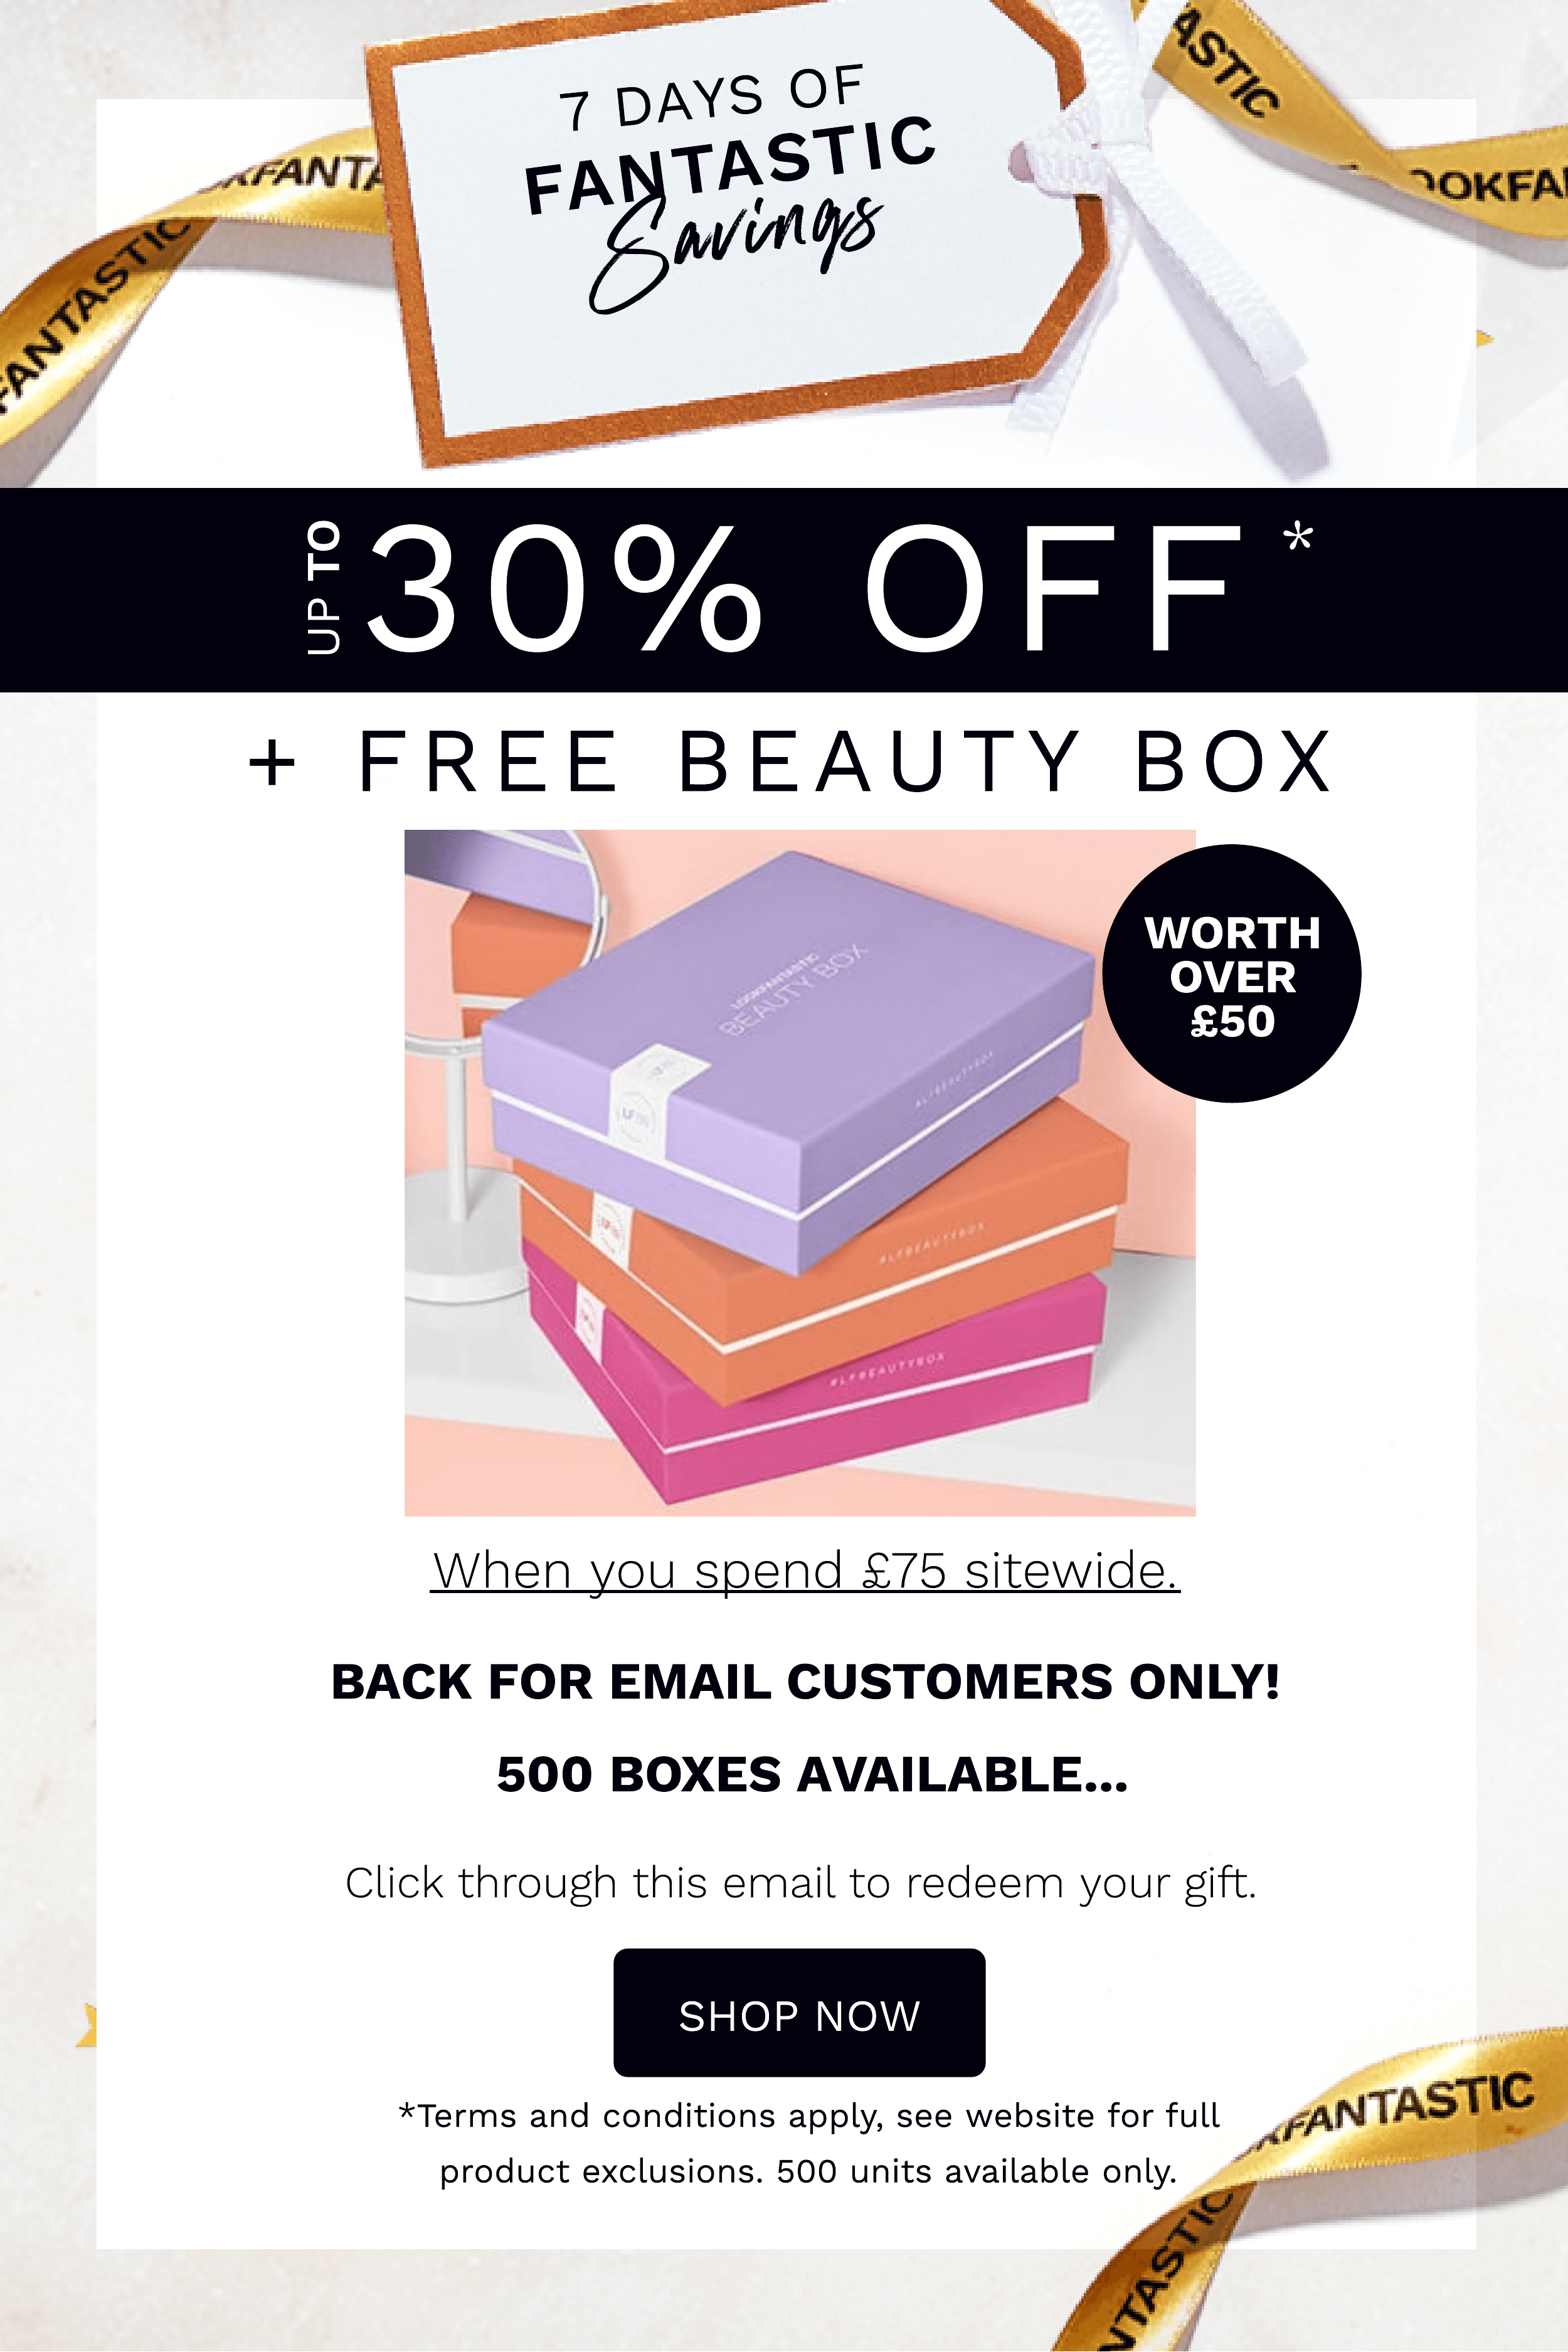 Up to 30 plus free beauty box